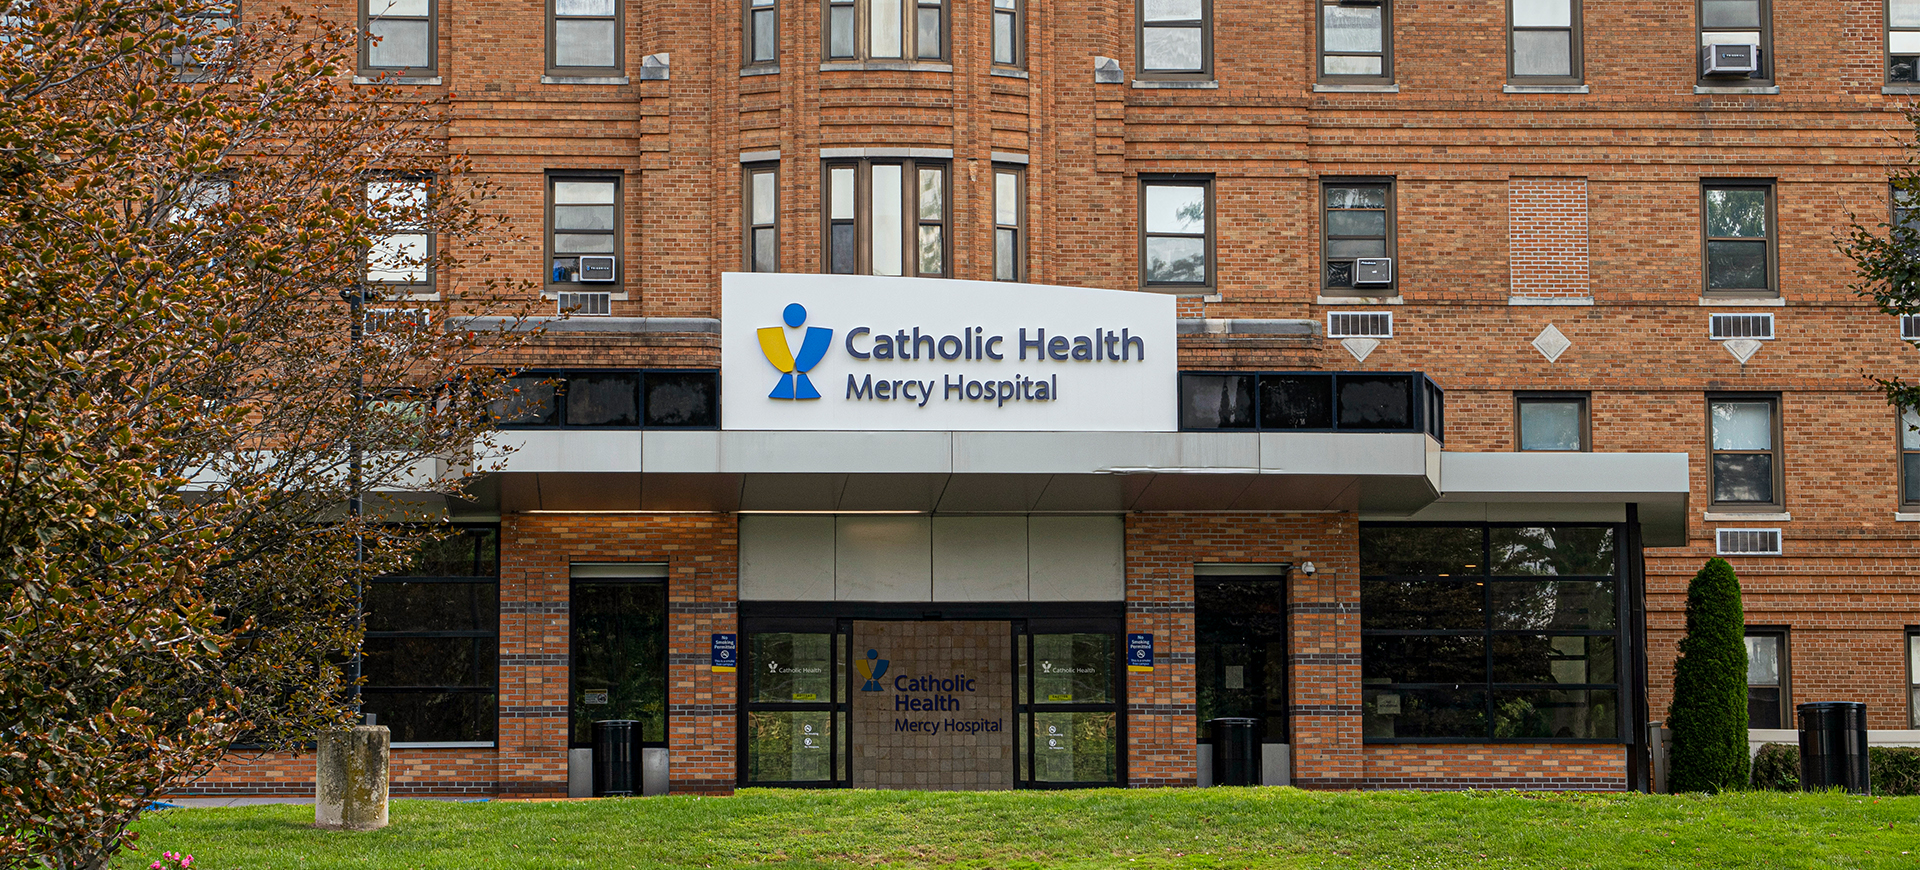       	        
	  	  Bishop McGann Women’s Imaging Center at Mercy Hospital
	  	  
	        